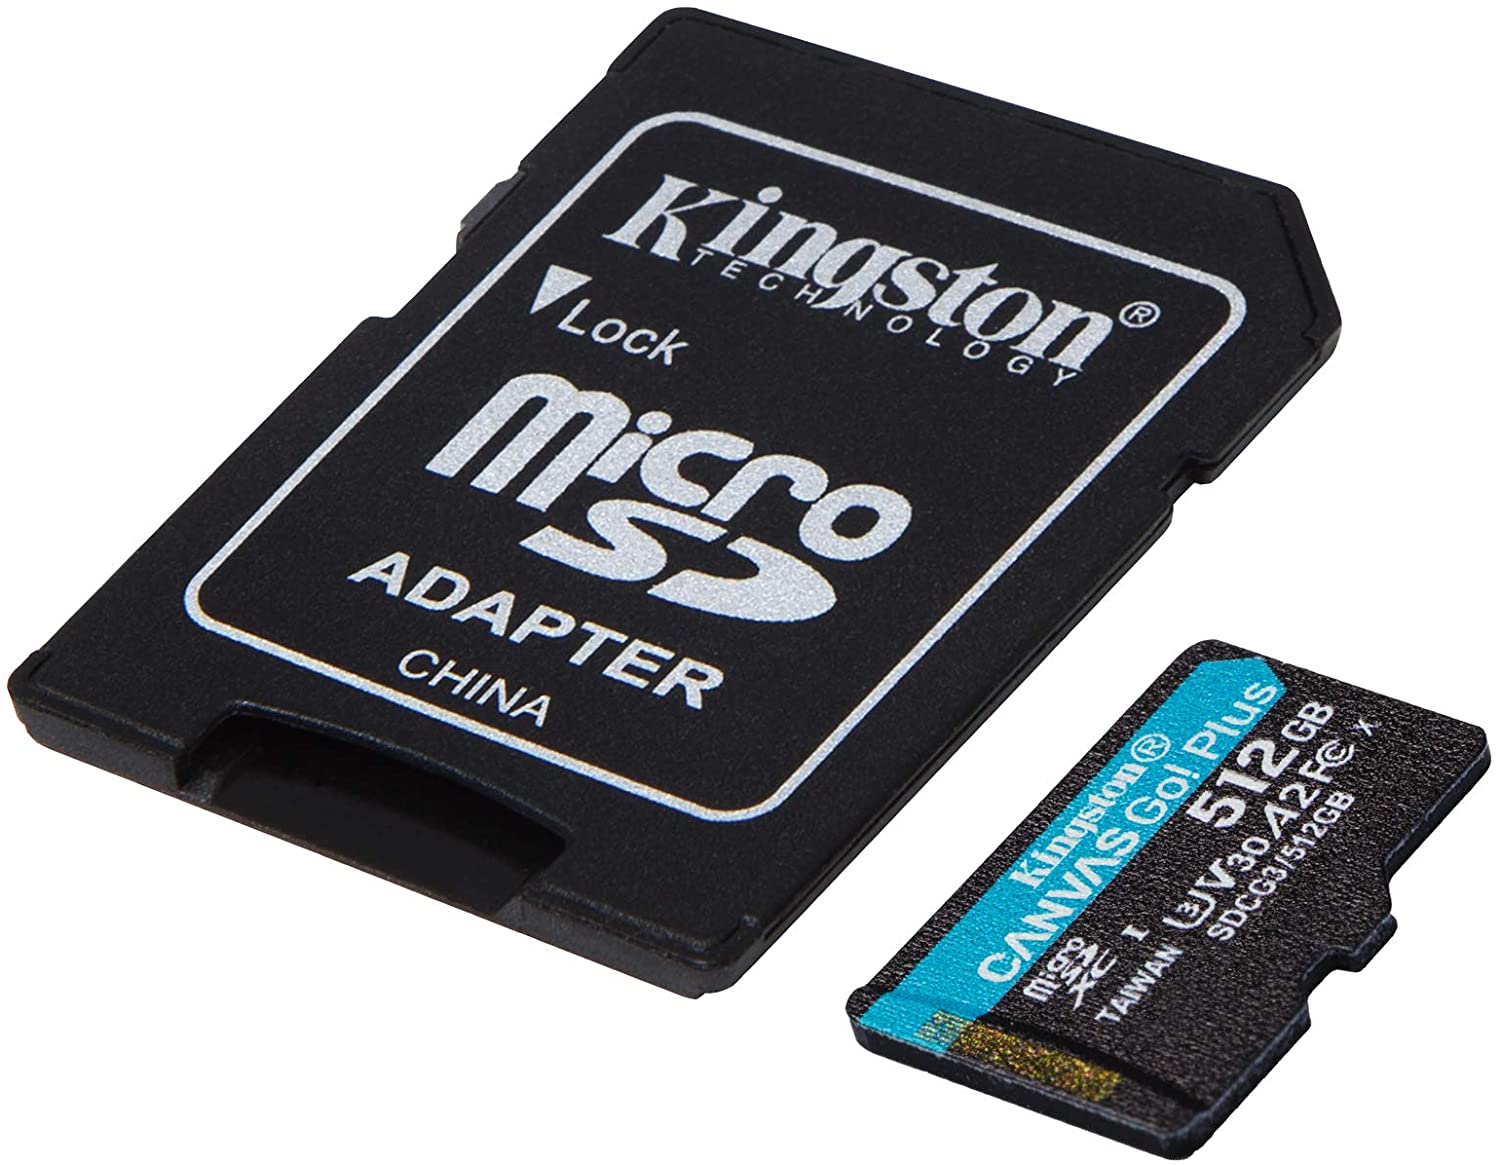 Kingston Tarjeta Micro SDXC 512GB UHS-I U3 V30 Clase 10 170MB/s